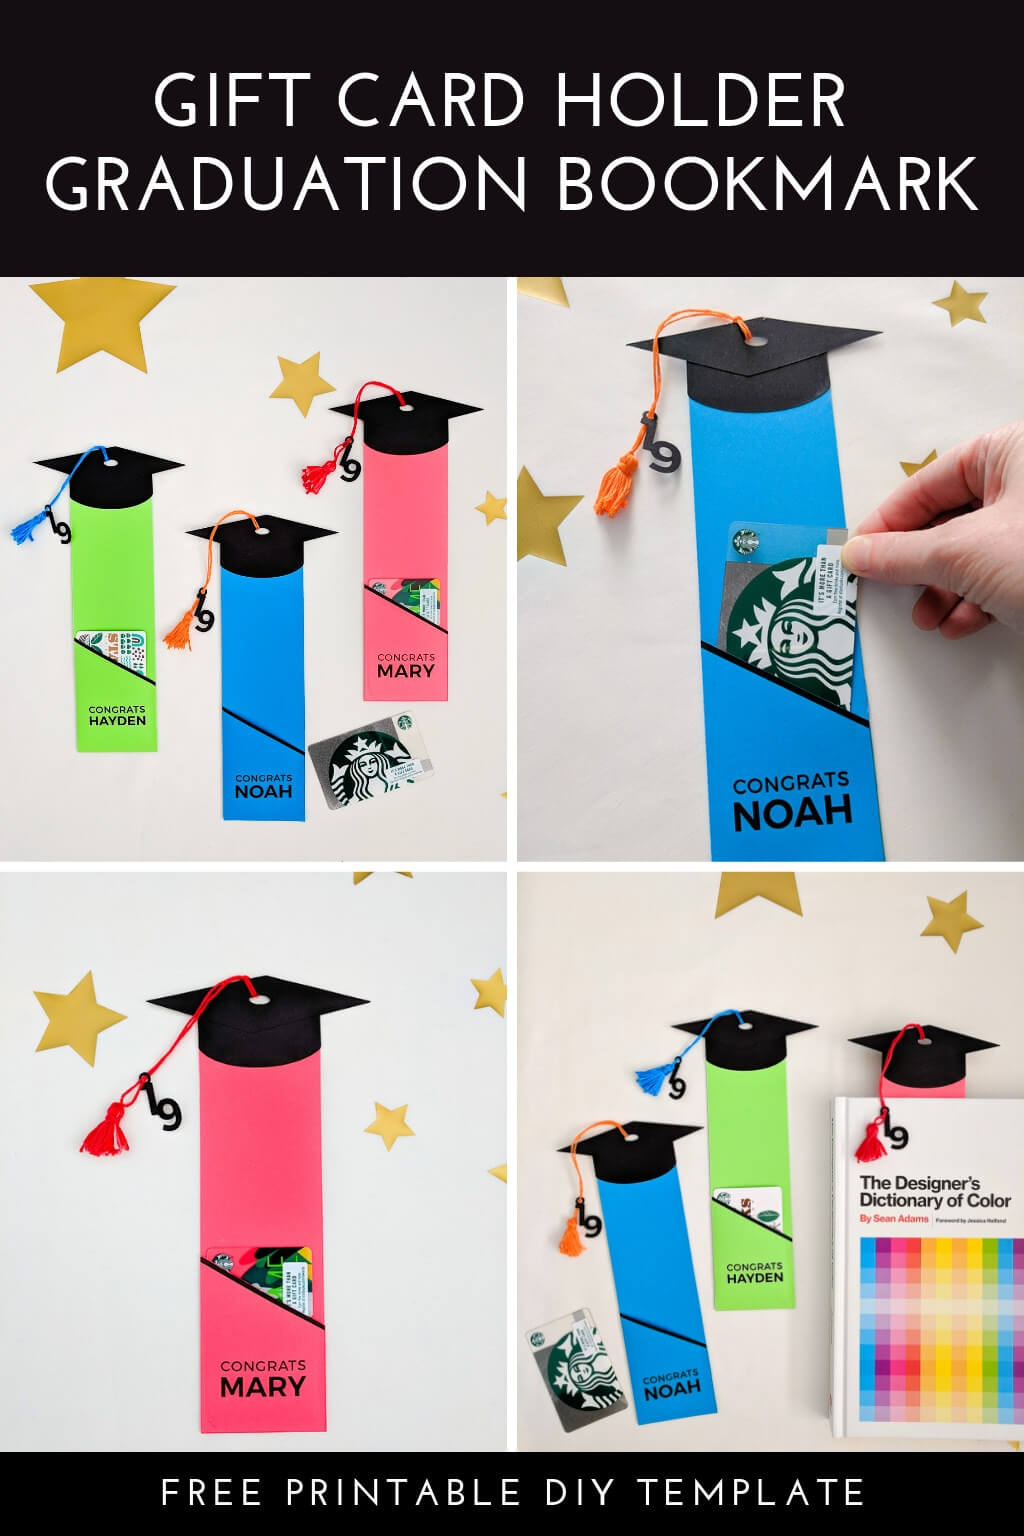 Graduation gift card bookmark